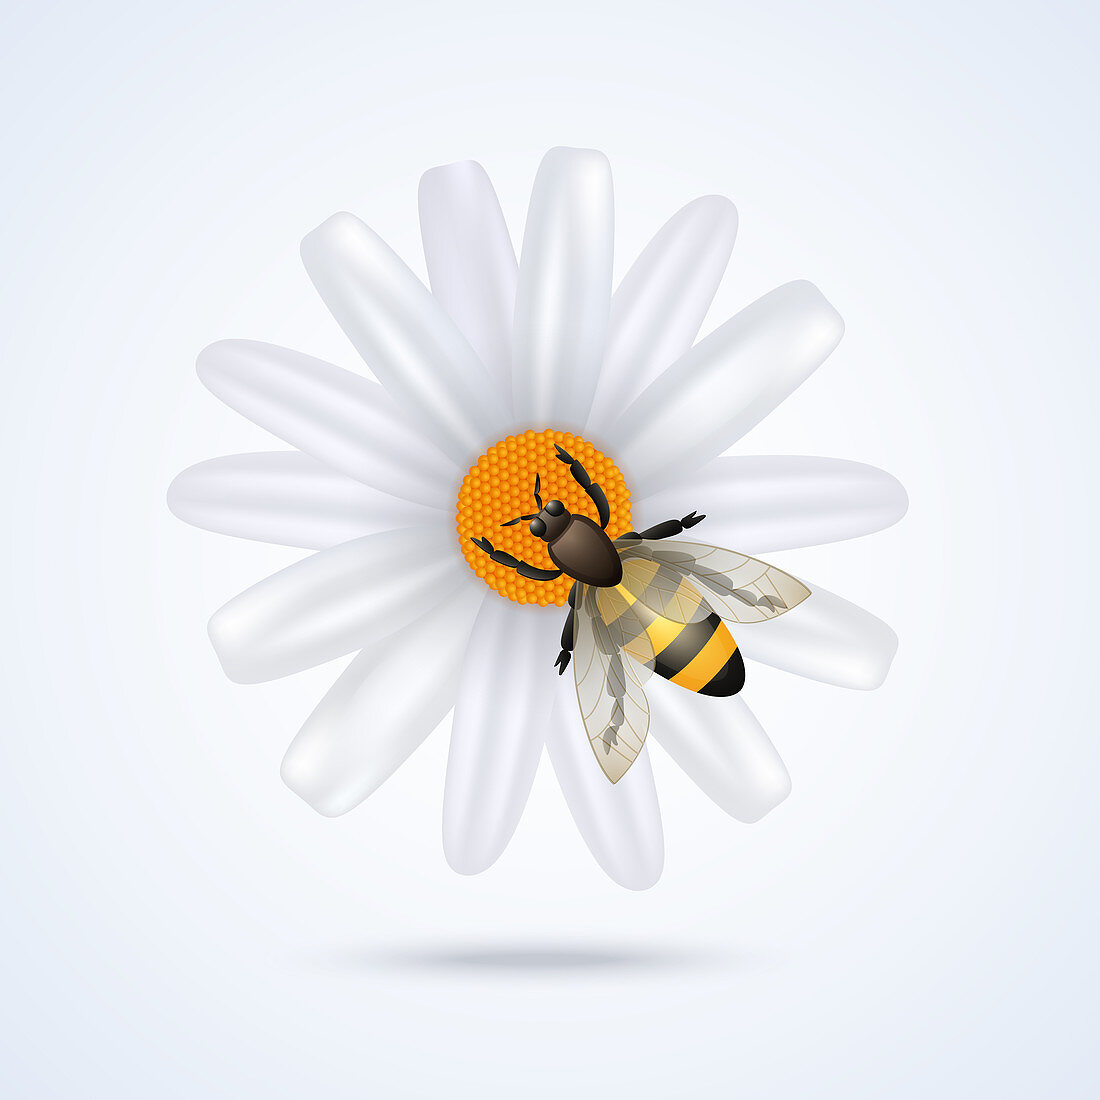 Bee on flower, illustration